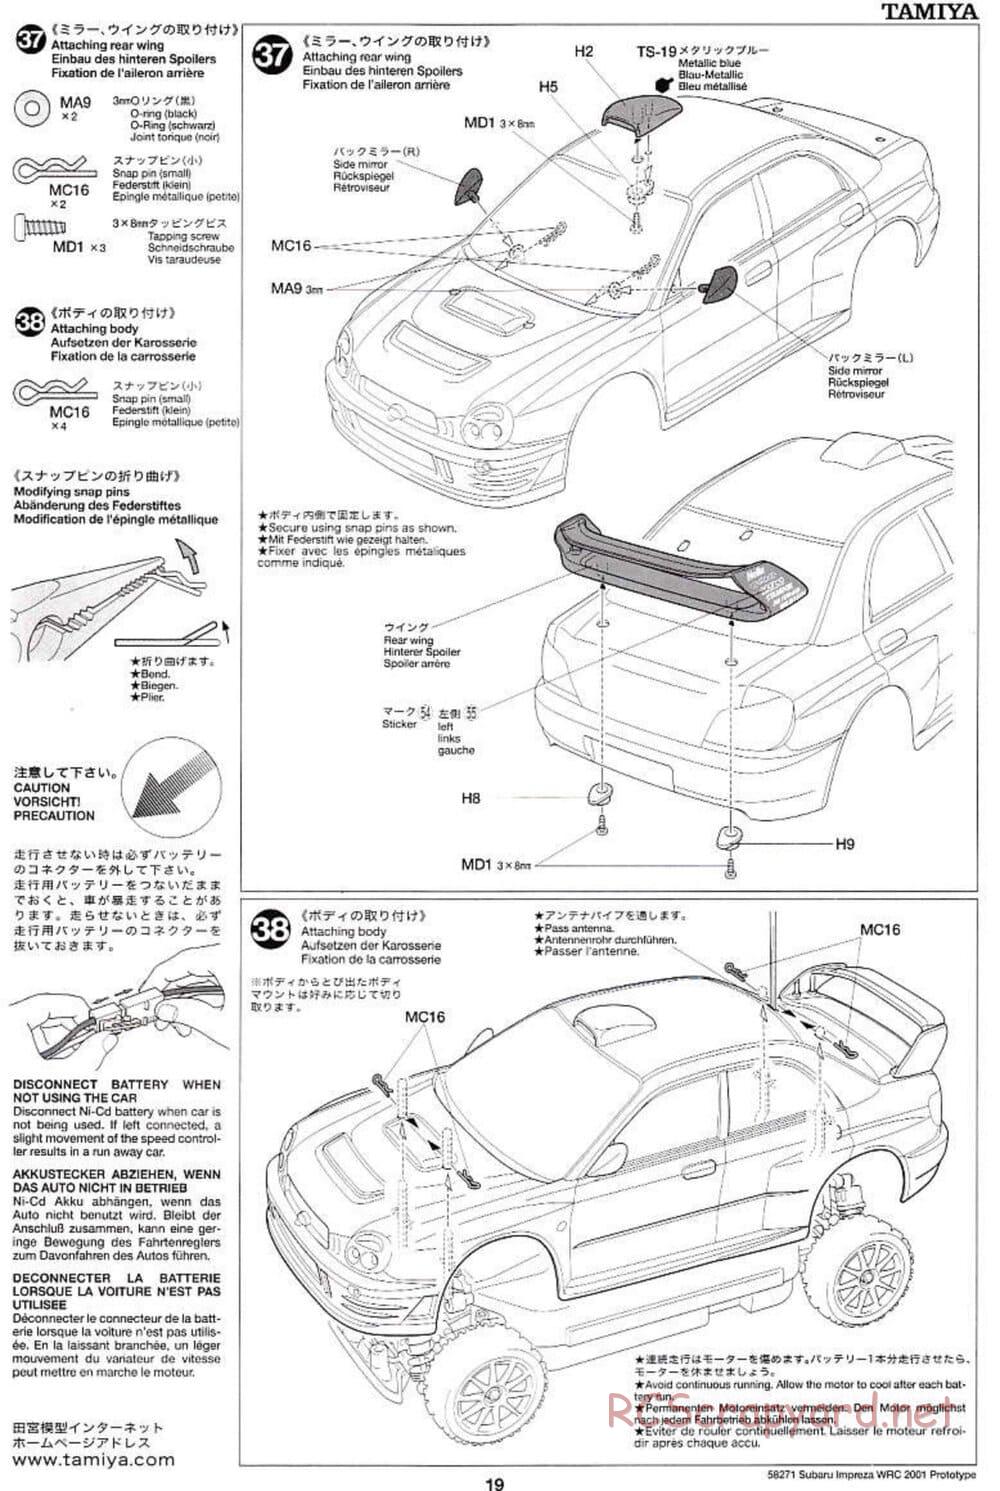 Tamiya - Subaru Impreza WRC 2001 Prototype - TB-01 Chassis - Manual - Page 19